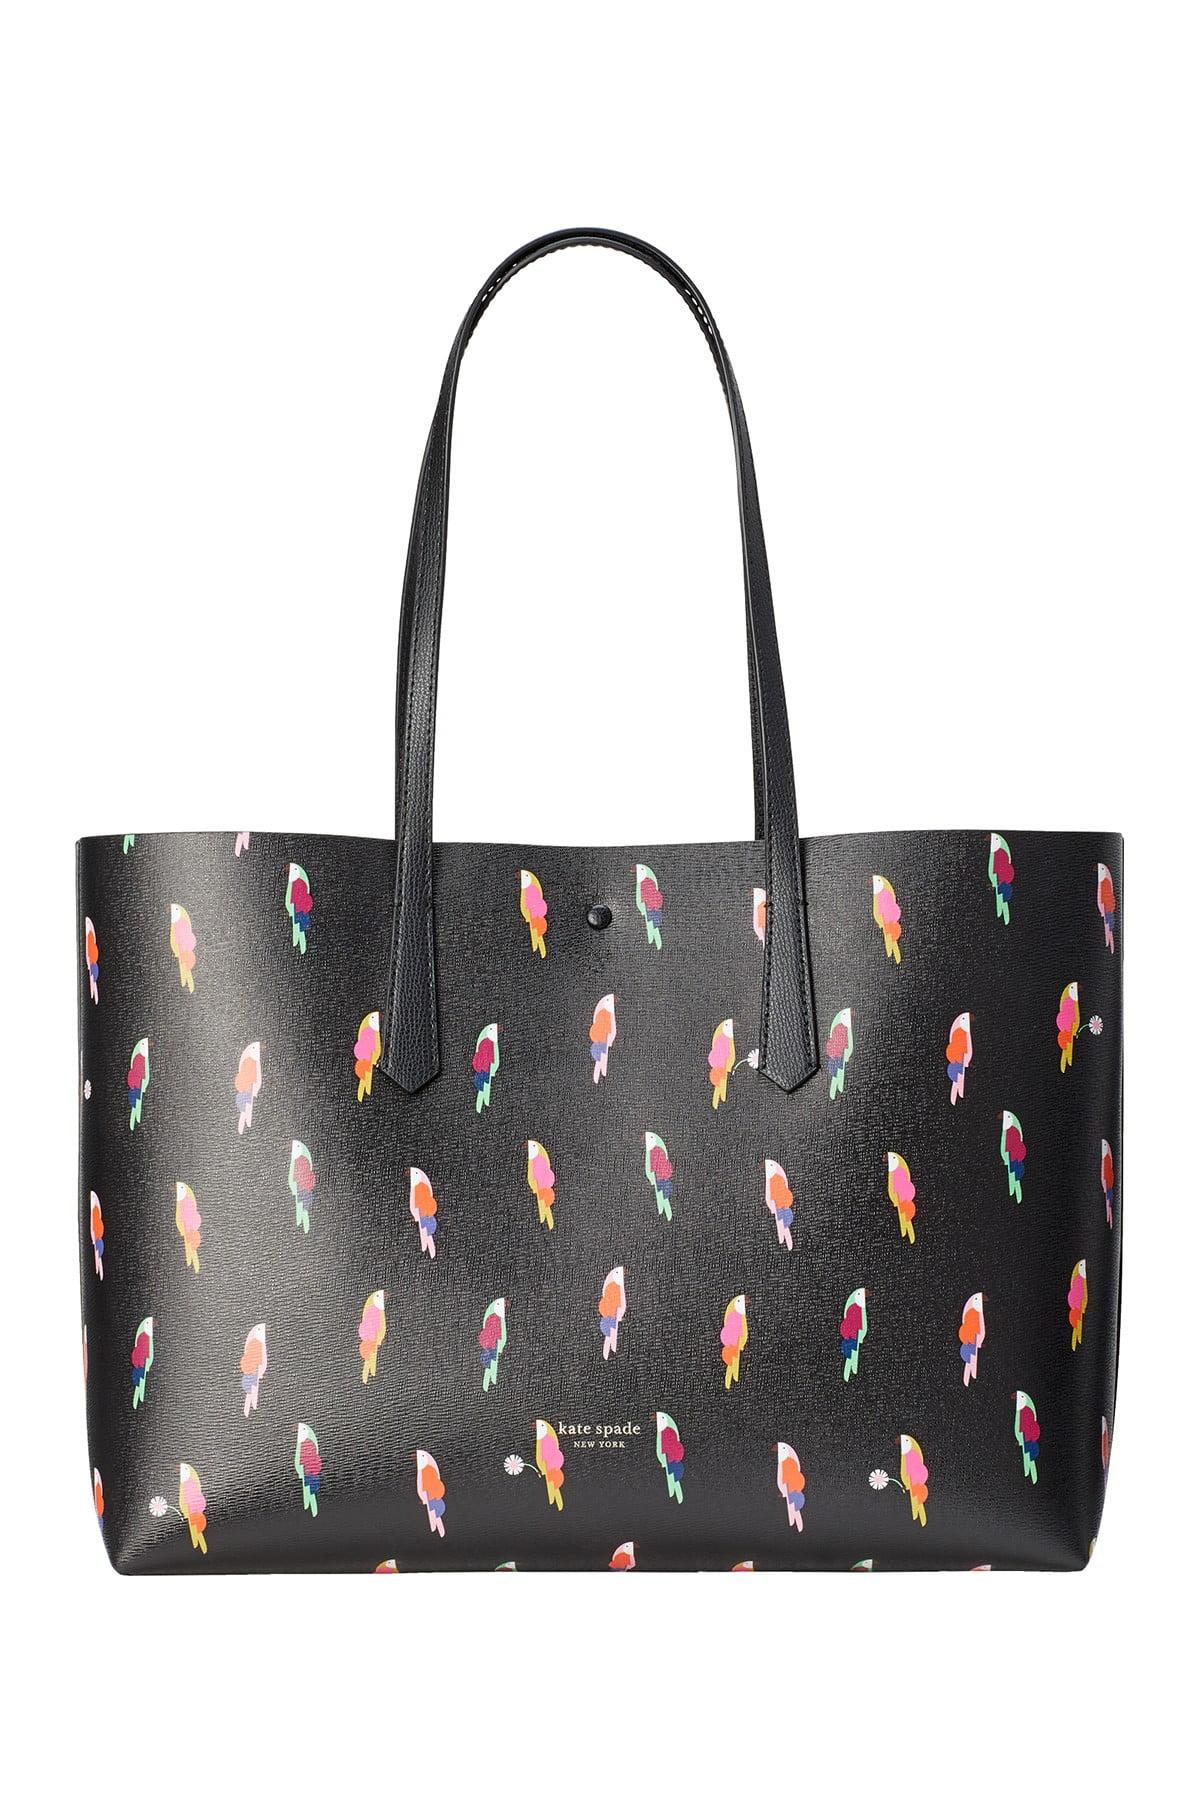 Kate Spade Parrot Print Tote Bag in Black | Lyst